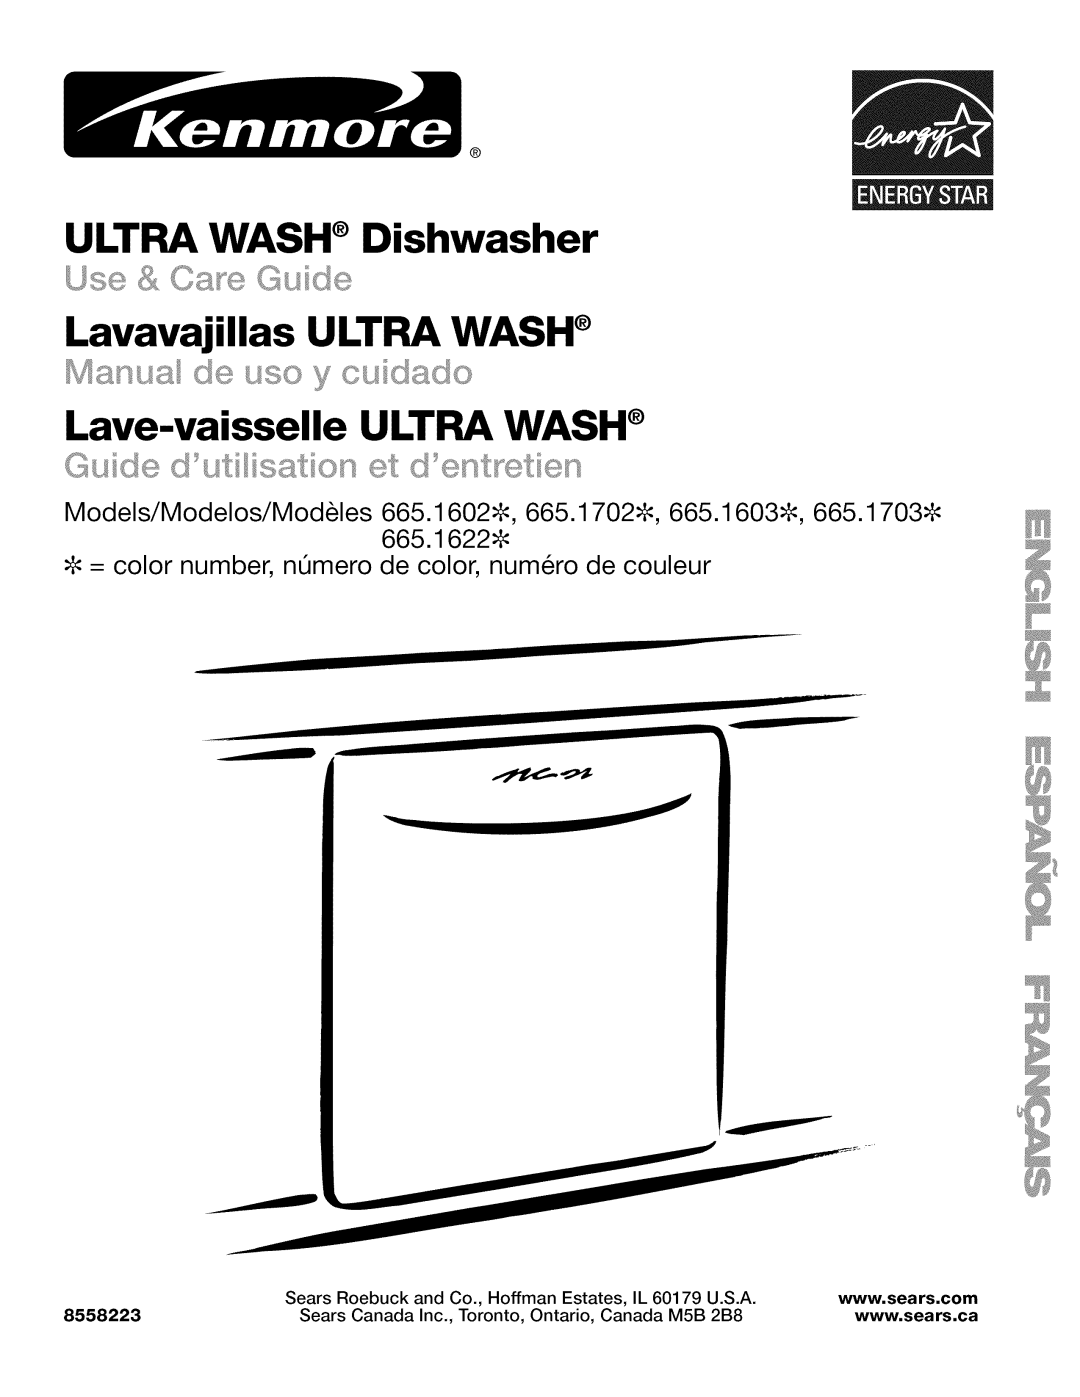 Kenmore manual Gd 4 UI, _;_l_, 665.1622¢, ULTRA WASH Dishwasher Lavavajillas ULTRA WASH, Lave-vaisselleULTRA WASH 